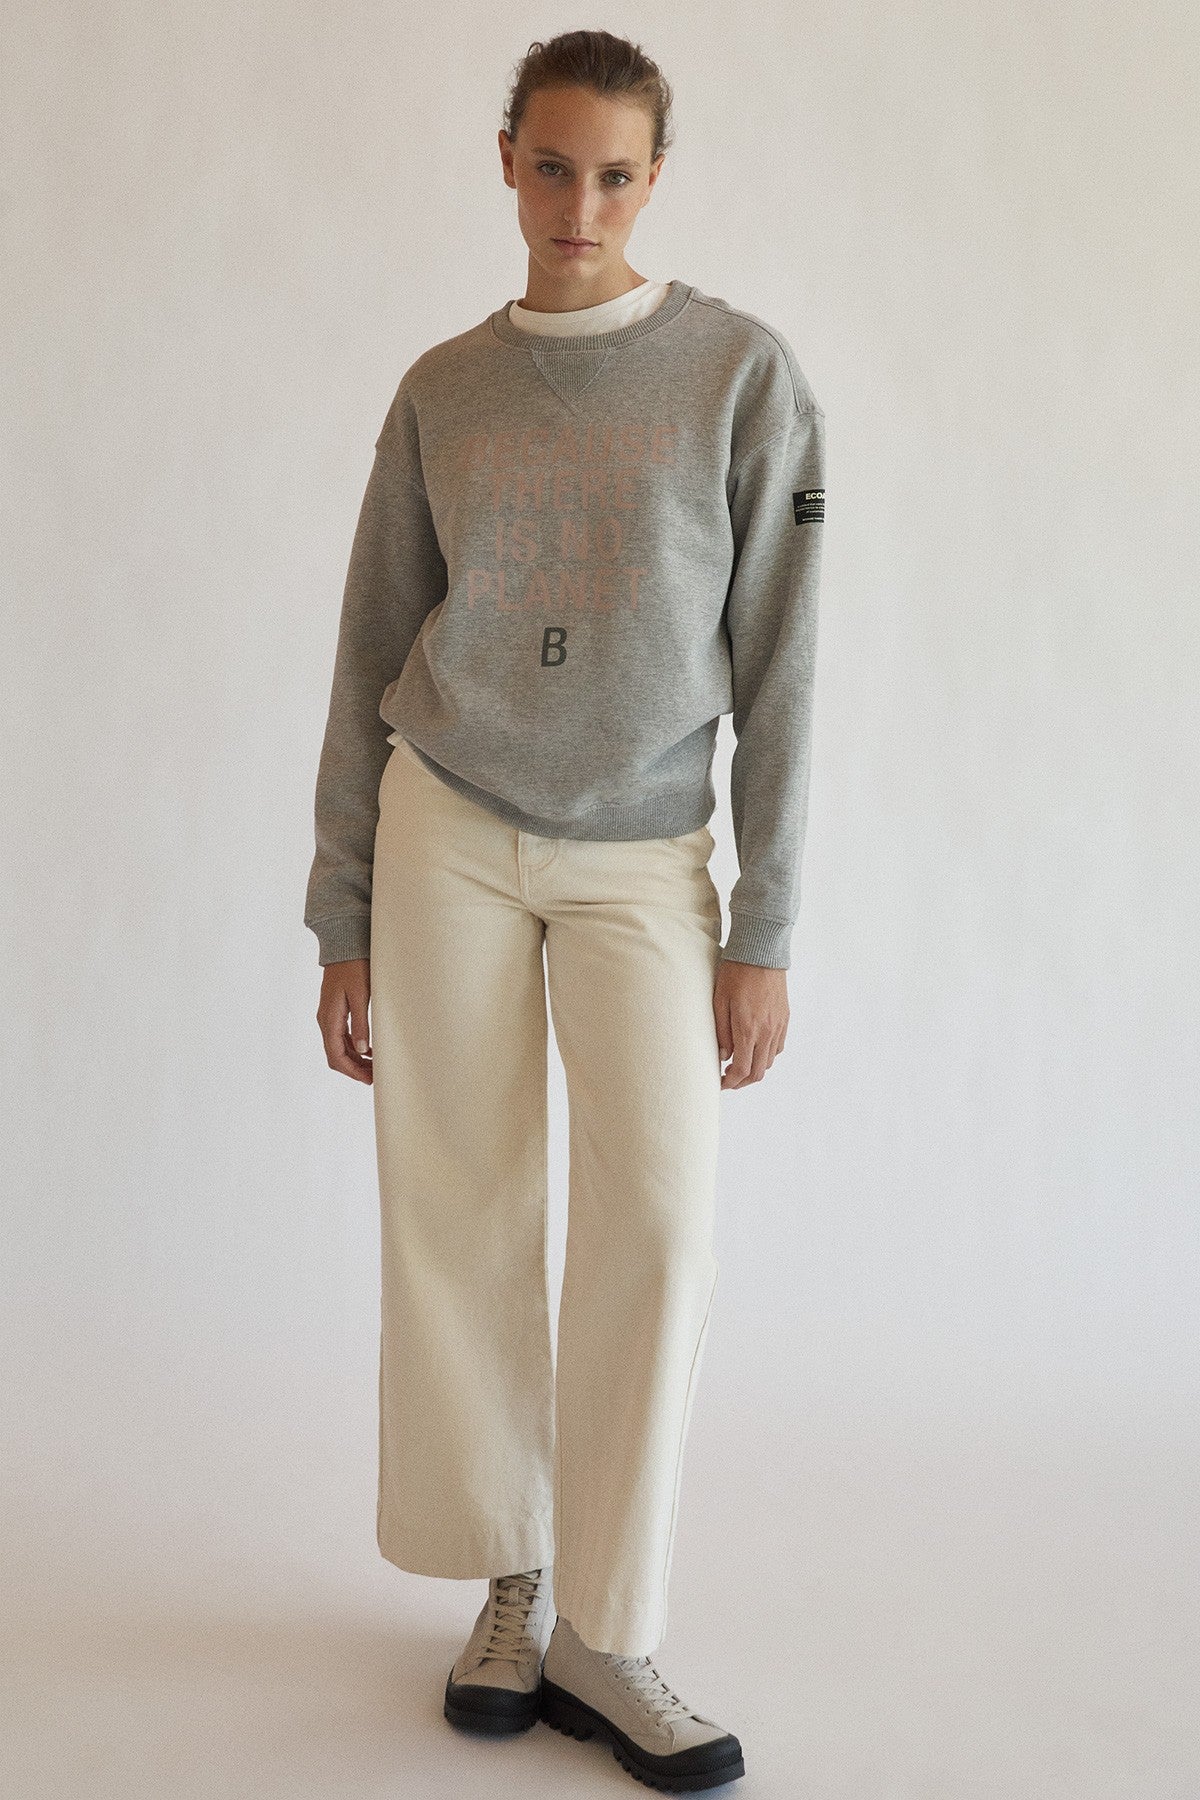 Llanesalf Because Woman Sweatshirt - Grey Melange